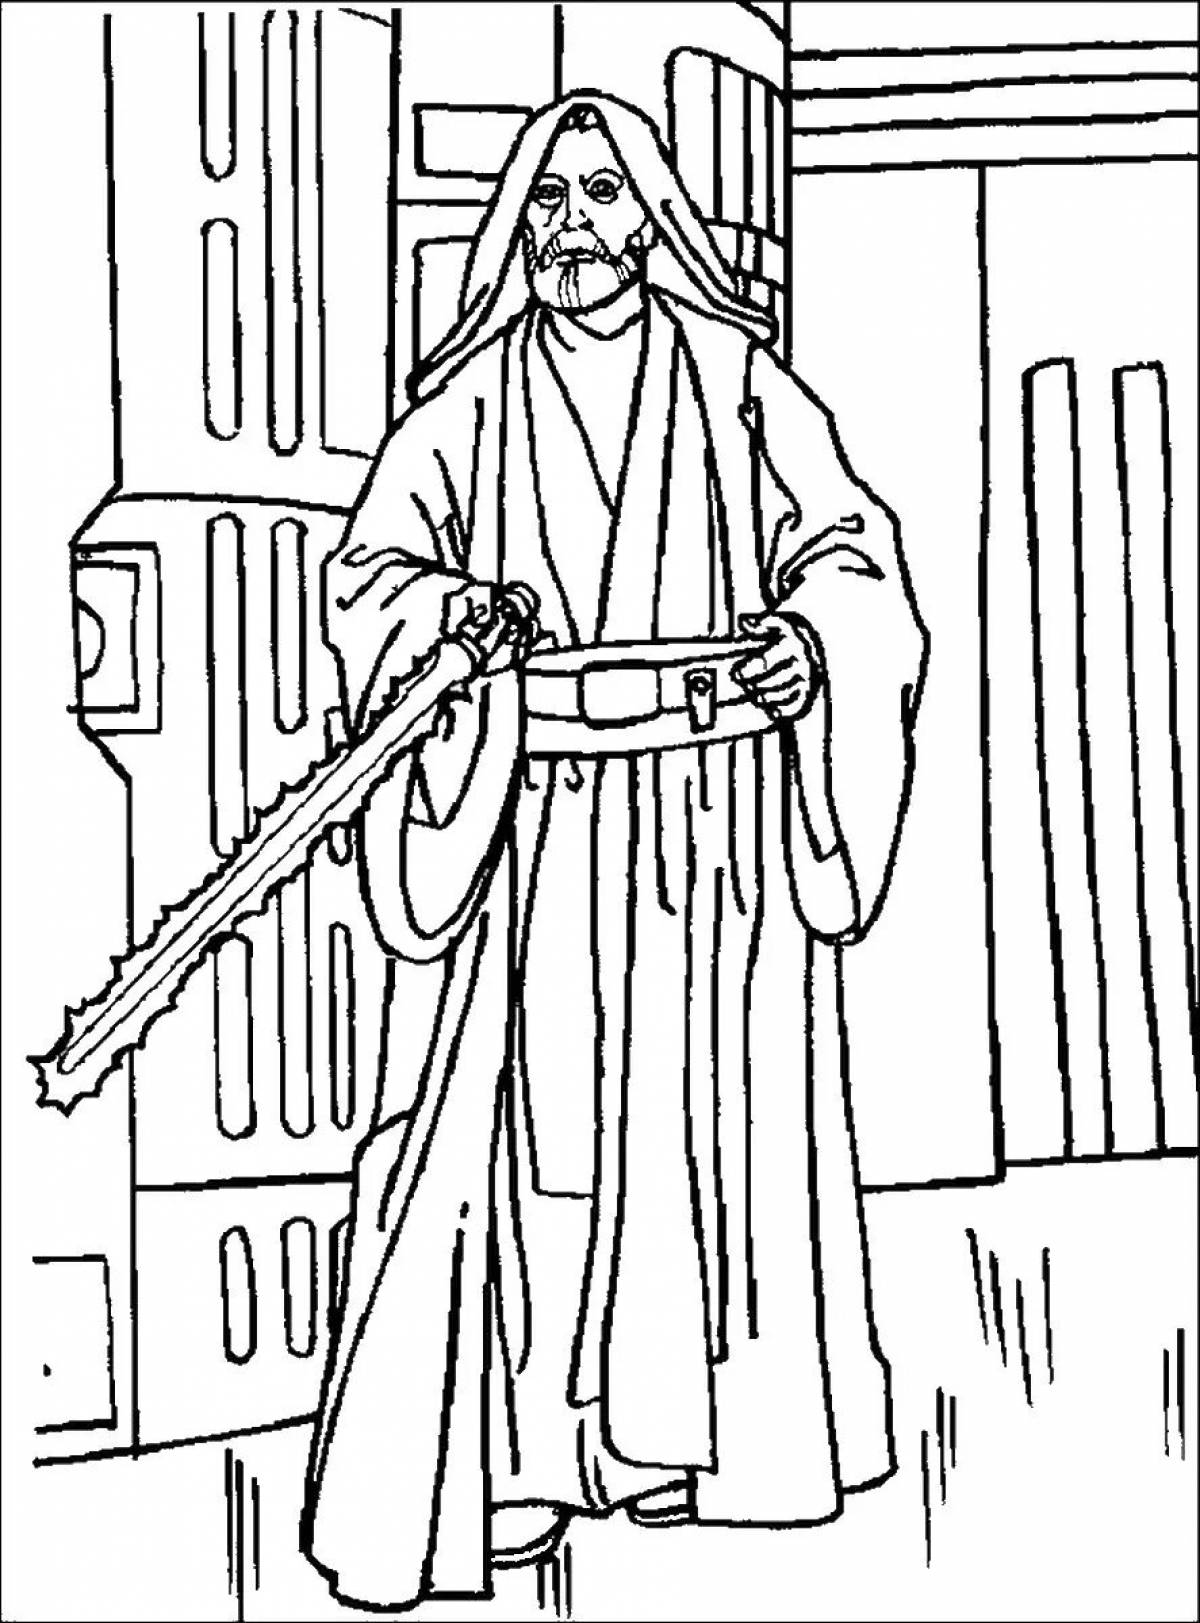 Obi-Wan Kenobi joyful coloring page